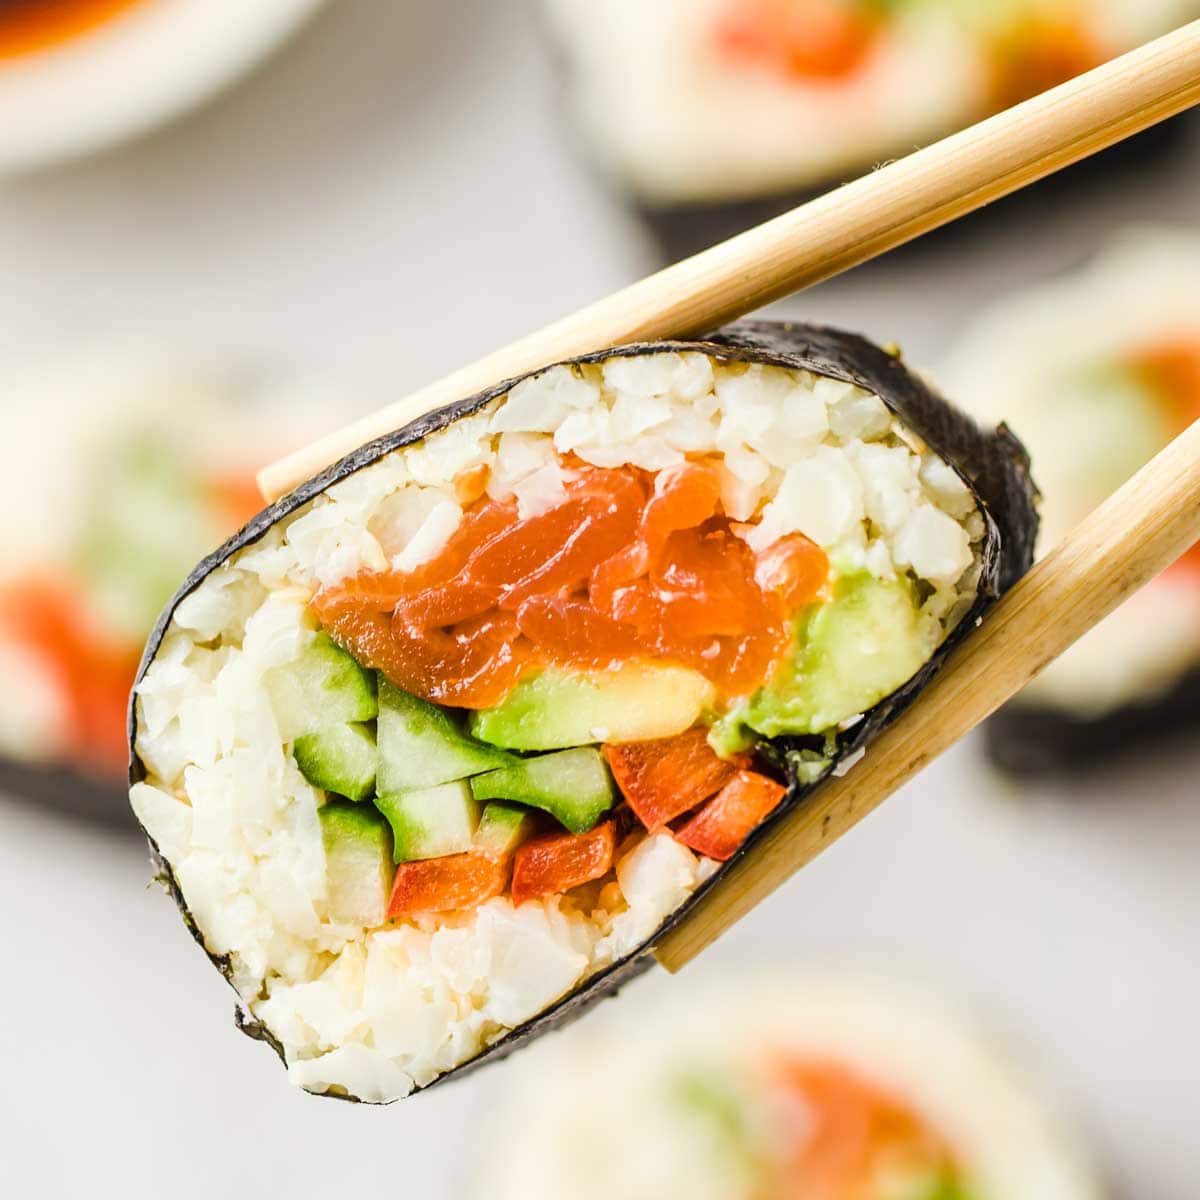 a pair of chopsticks lifting a salmon sushi roll